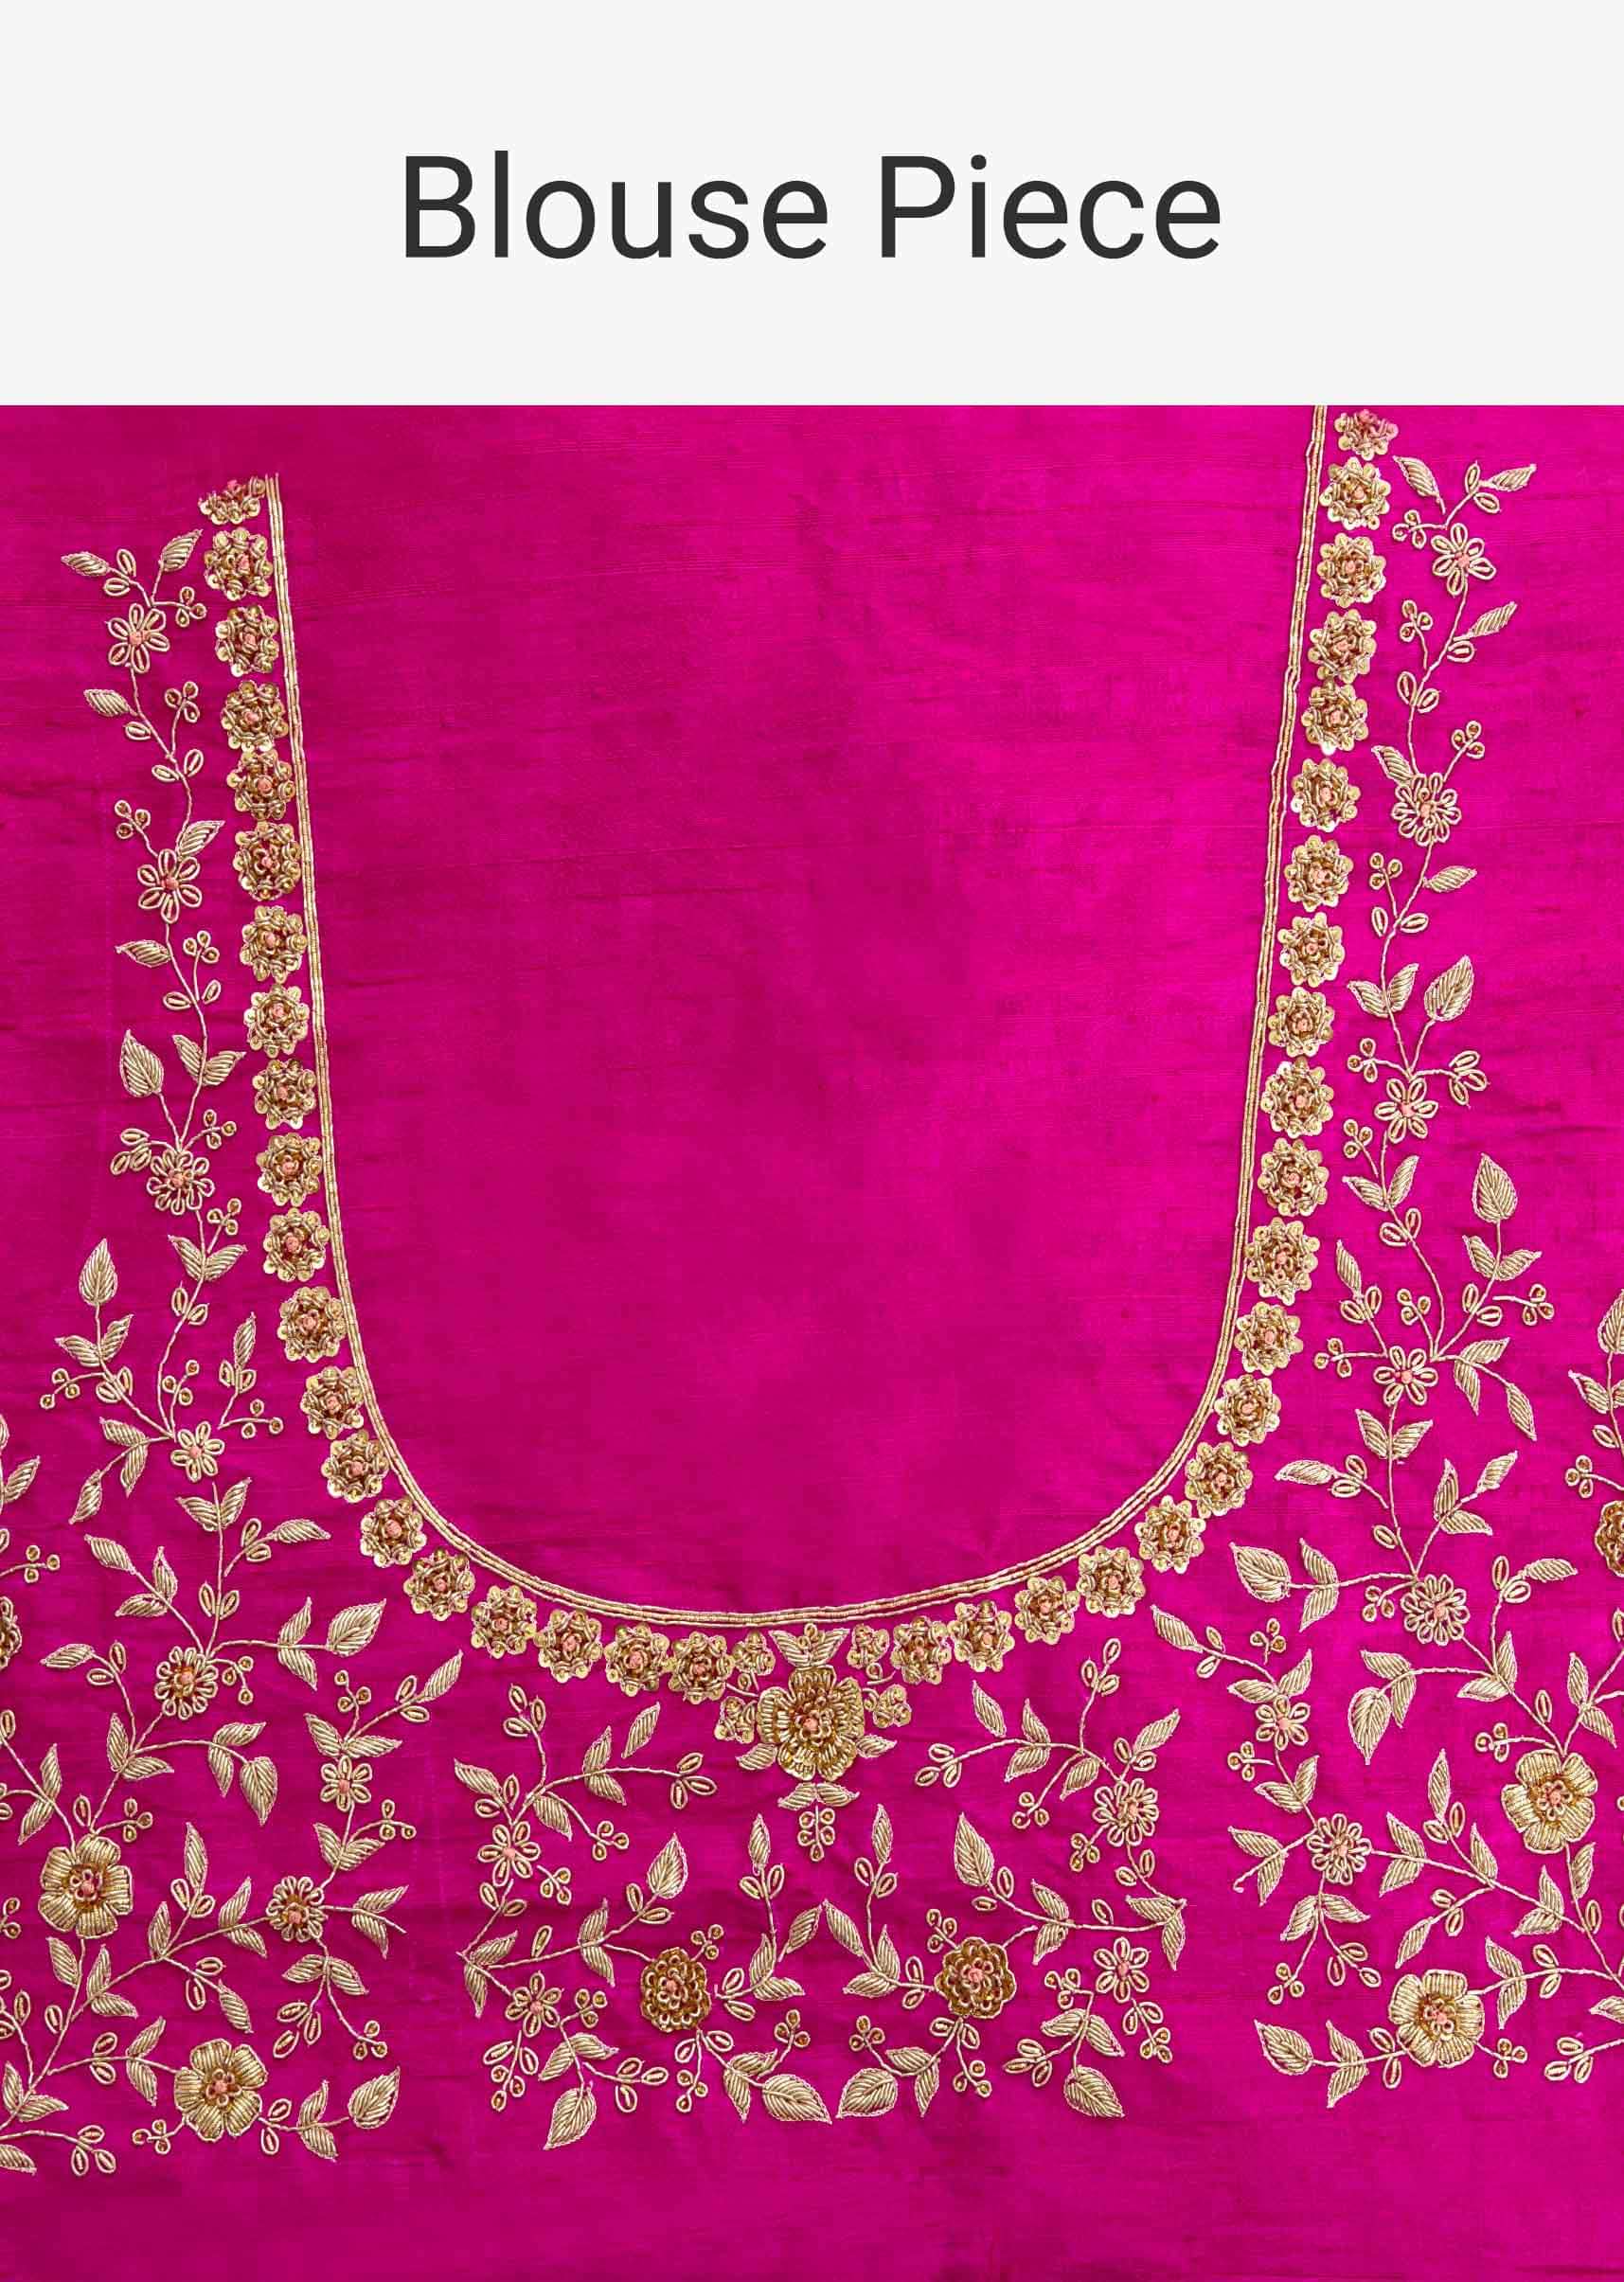 Hot pink raw silk lehenga  with net dupatta andonly